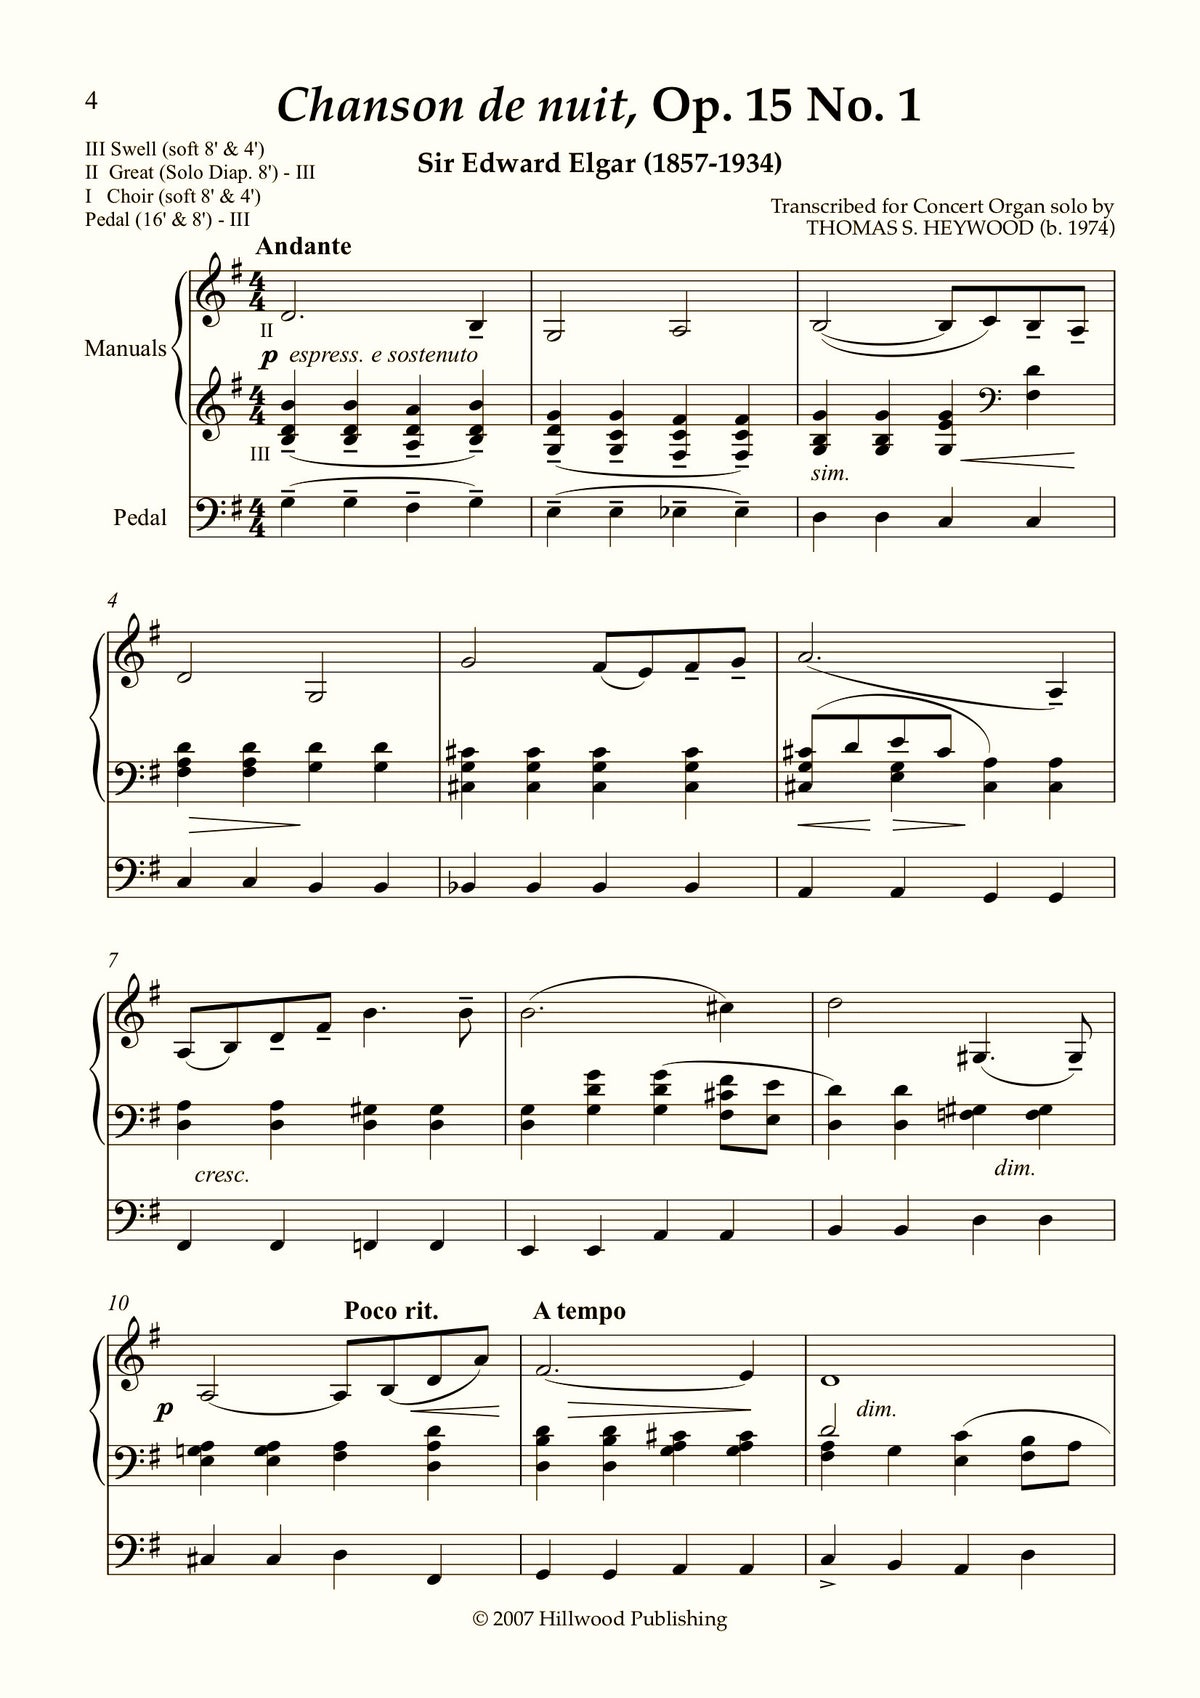 Elgar/Heywood - Chanson de nuit, Op. 15 No. 1 (Score) - Concert Organ International